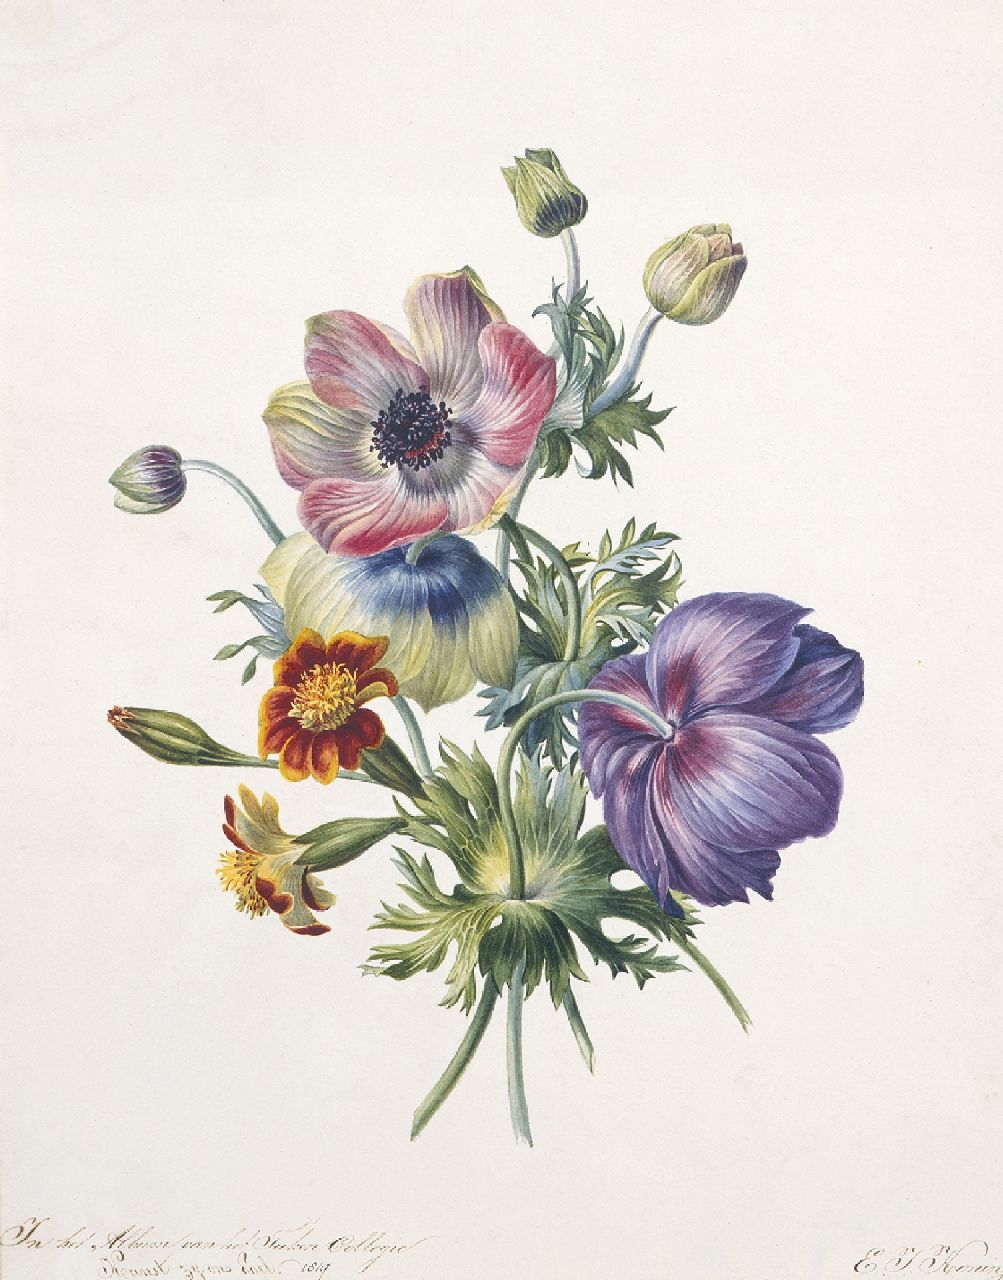 Koning E.J.  | Elisabeth Johanna Koning, A study of anemones, Aquarell auf Papier 32,2 x 25,6 cm, signed l.r. und dated 1847